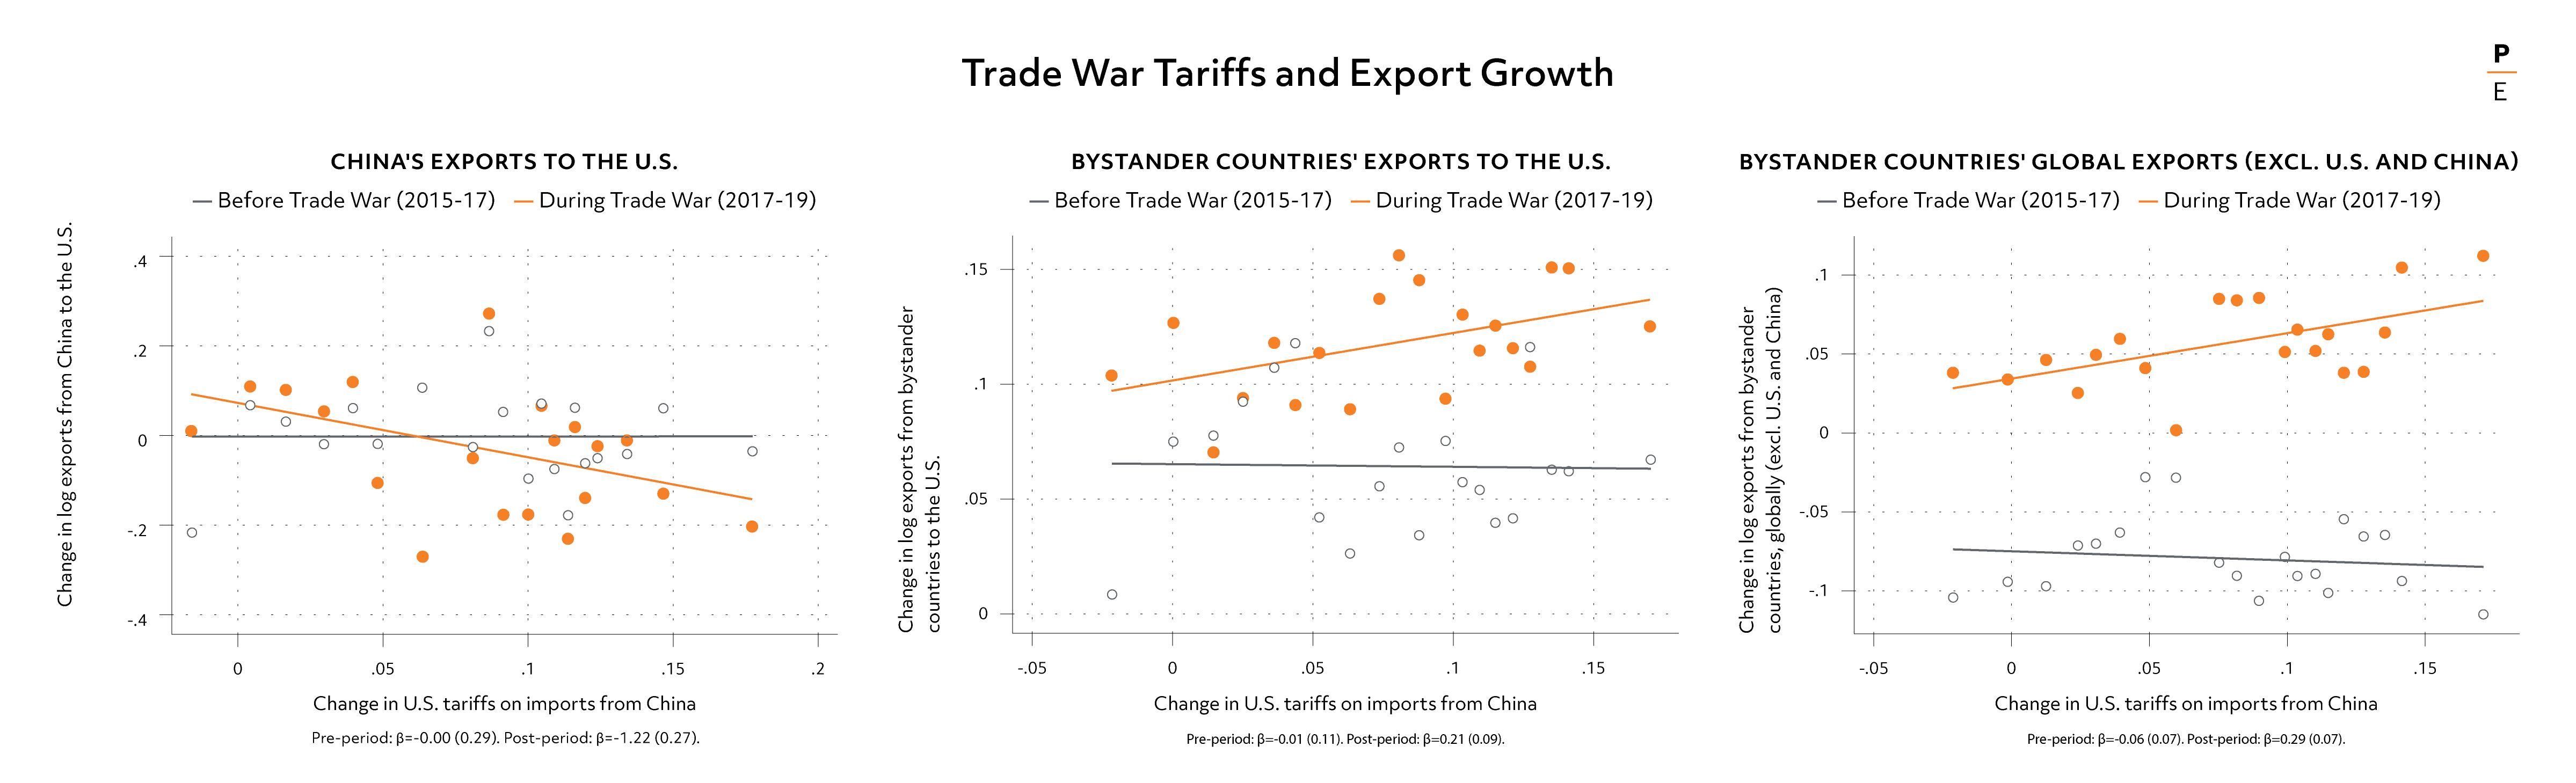 Figure 2: Trade War Tariffs and Export Growth